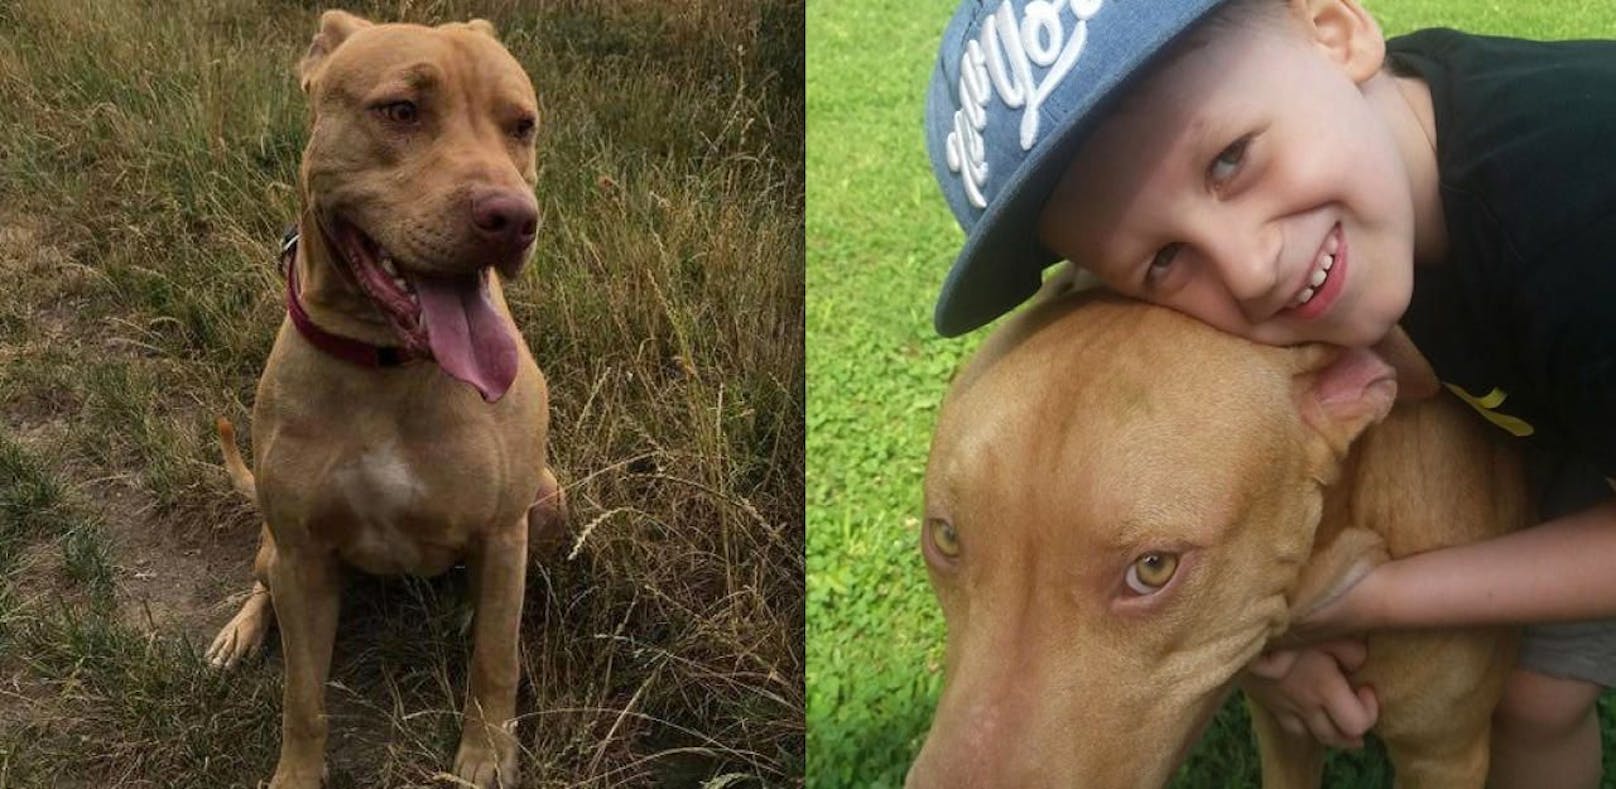 Jäger erschoss Familienhund "Tyson"